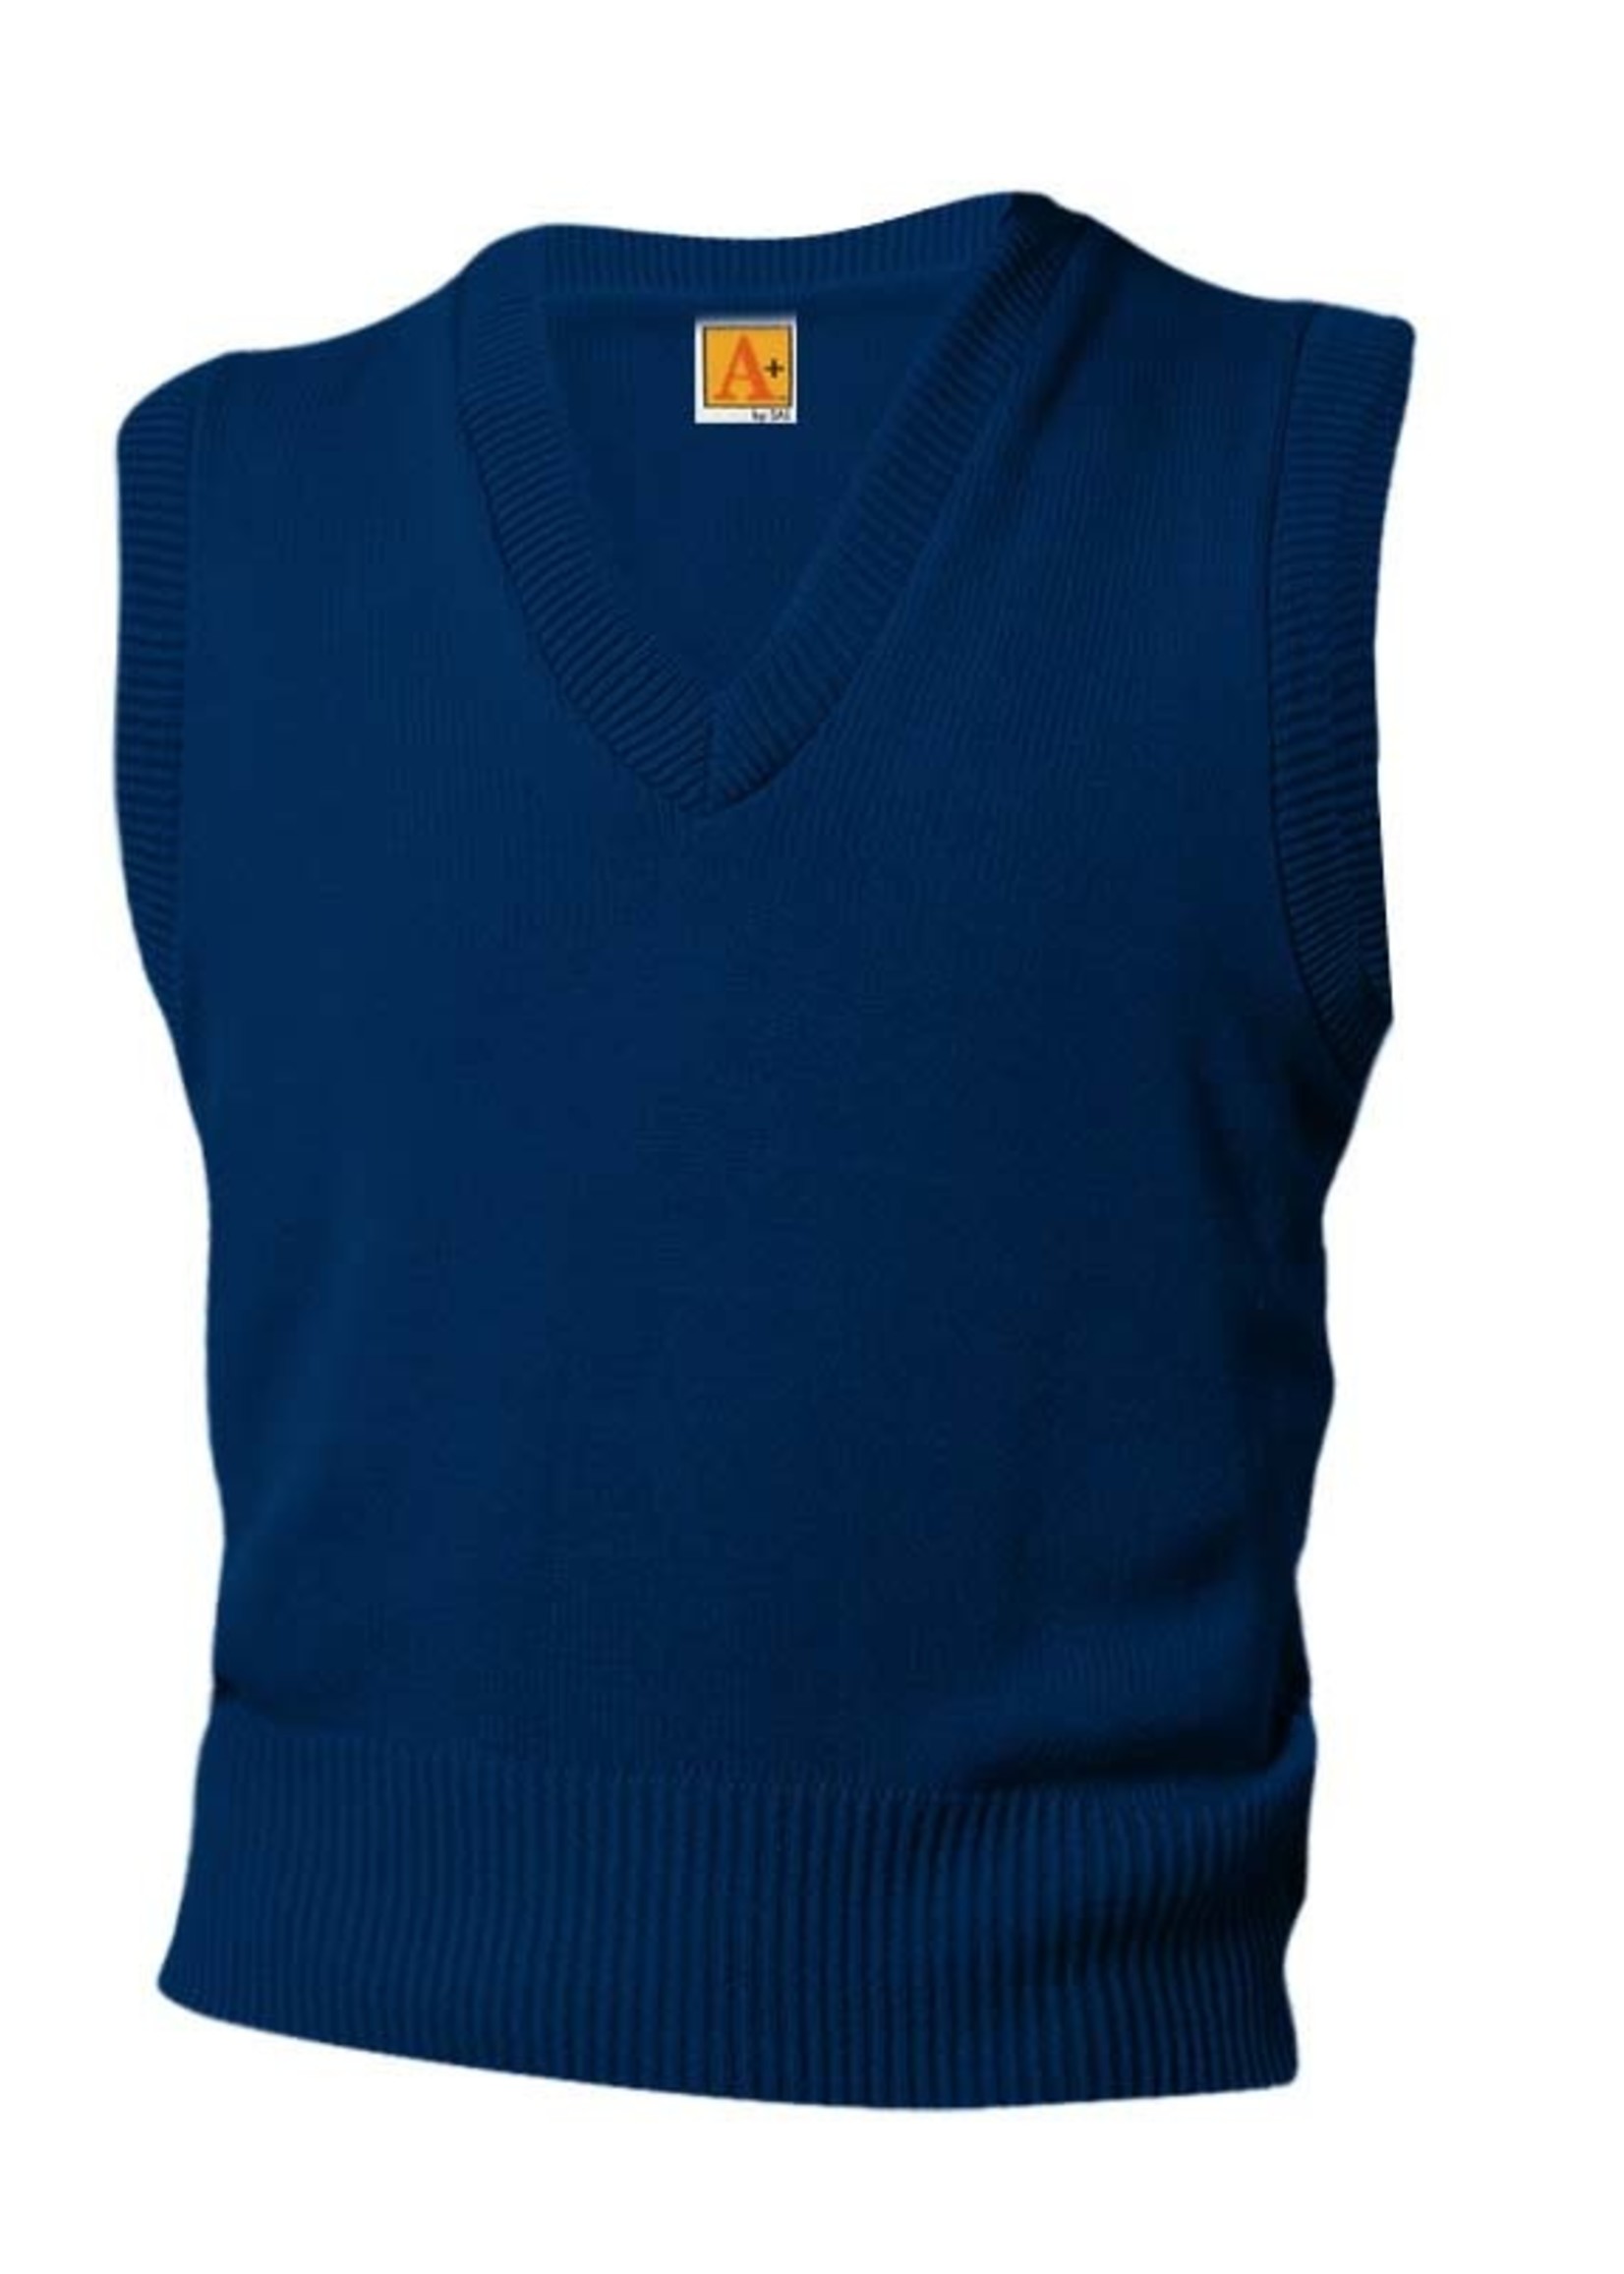 OLMC Navy V-neck sweater vest